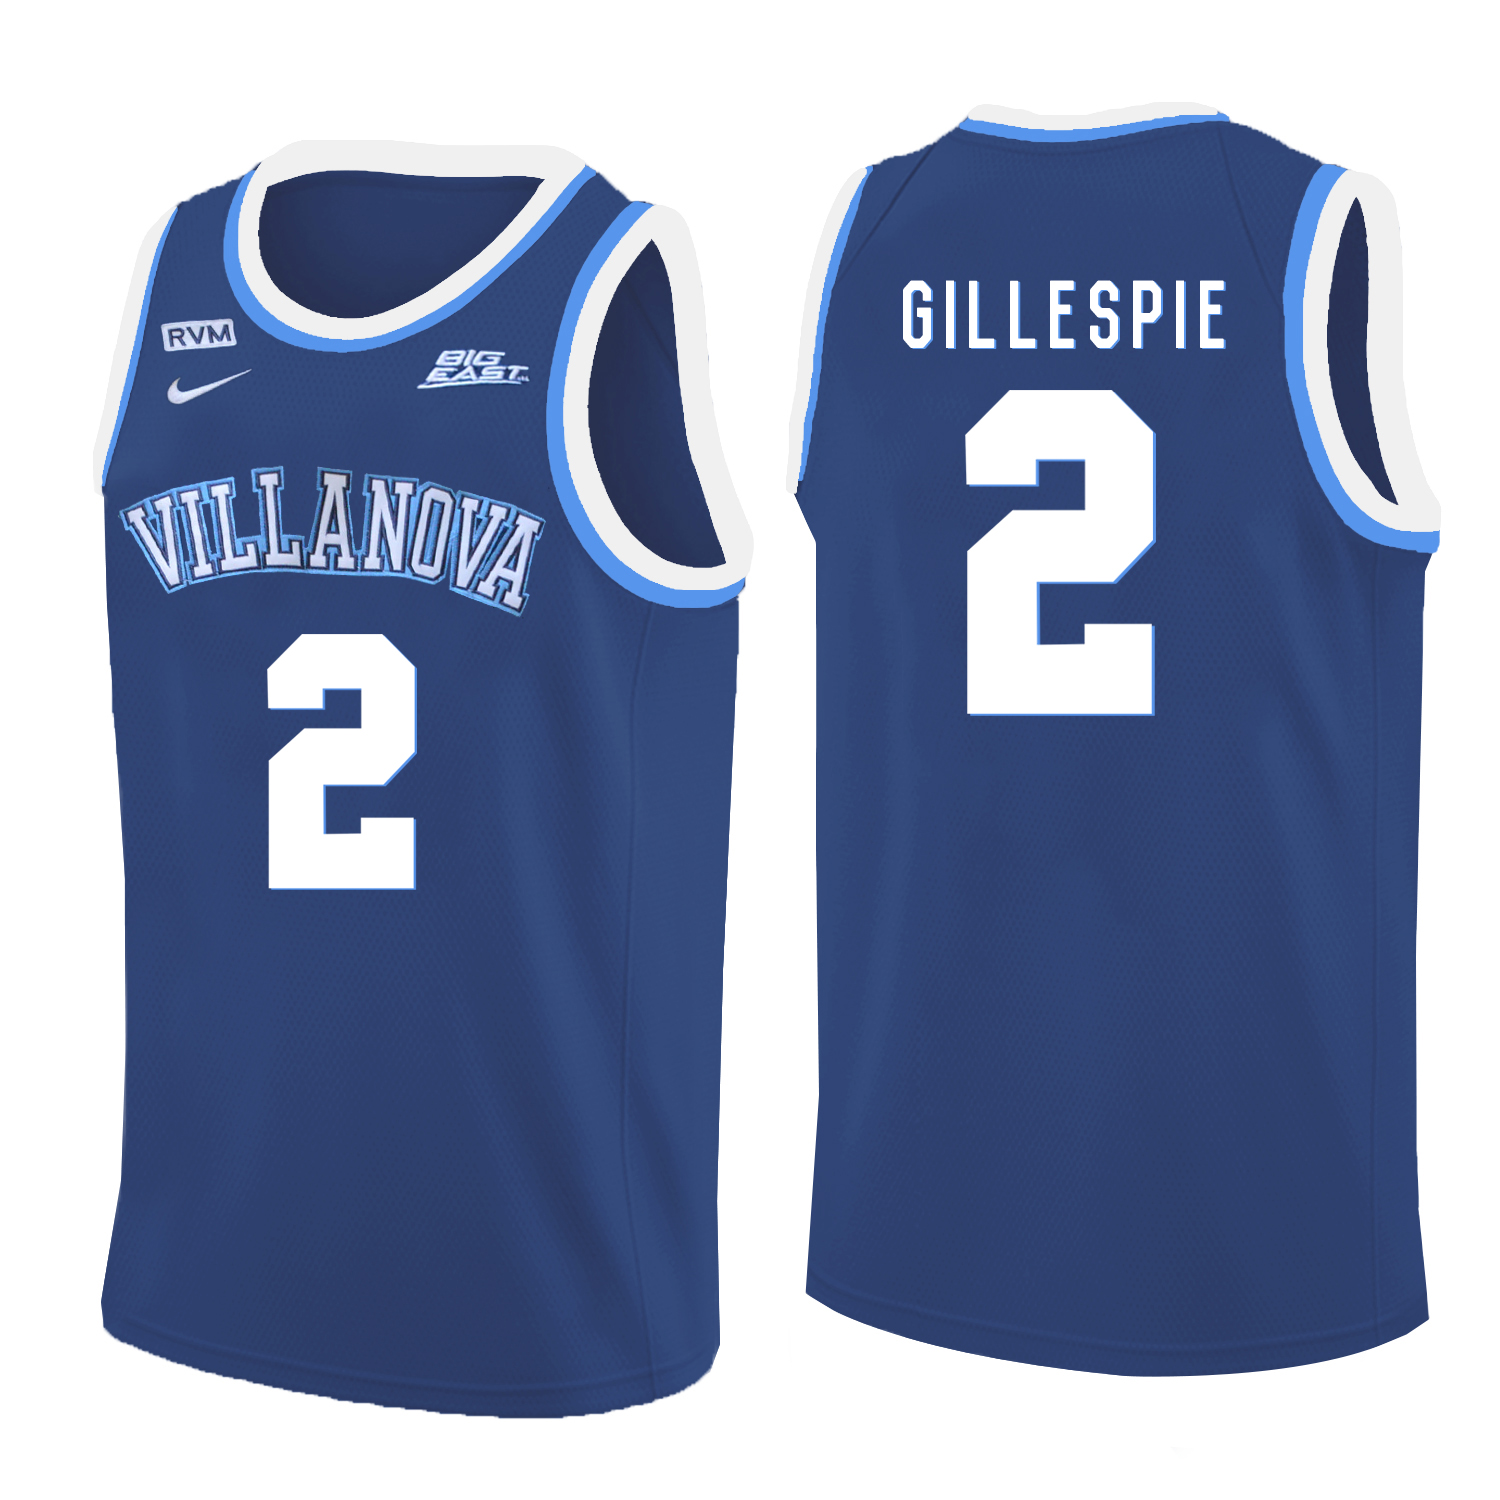 Villanova Wildcats 2 Collin Gillespie Blue College Basketball Jersey